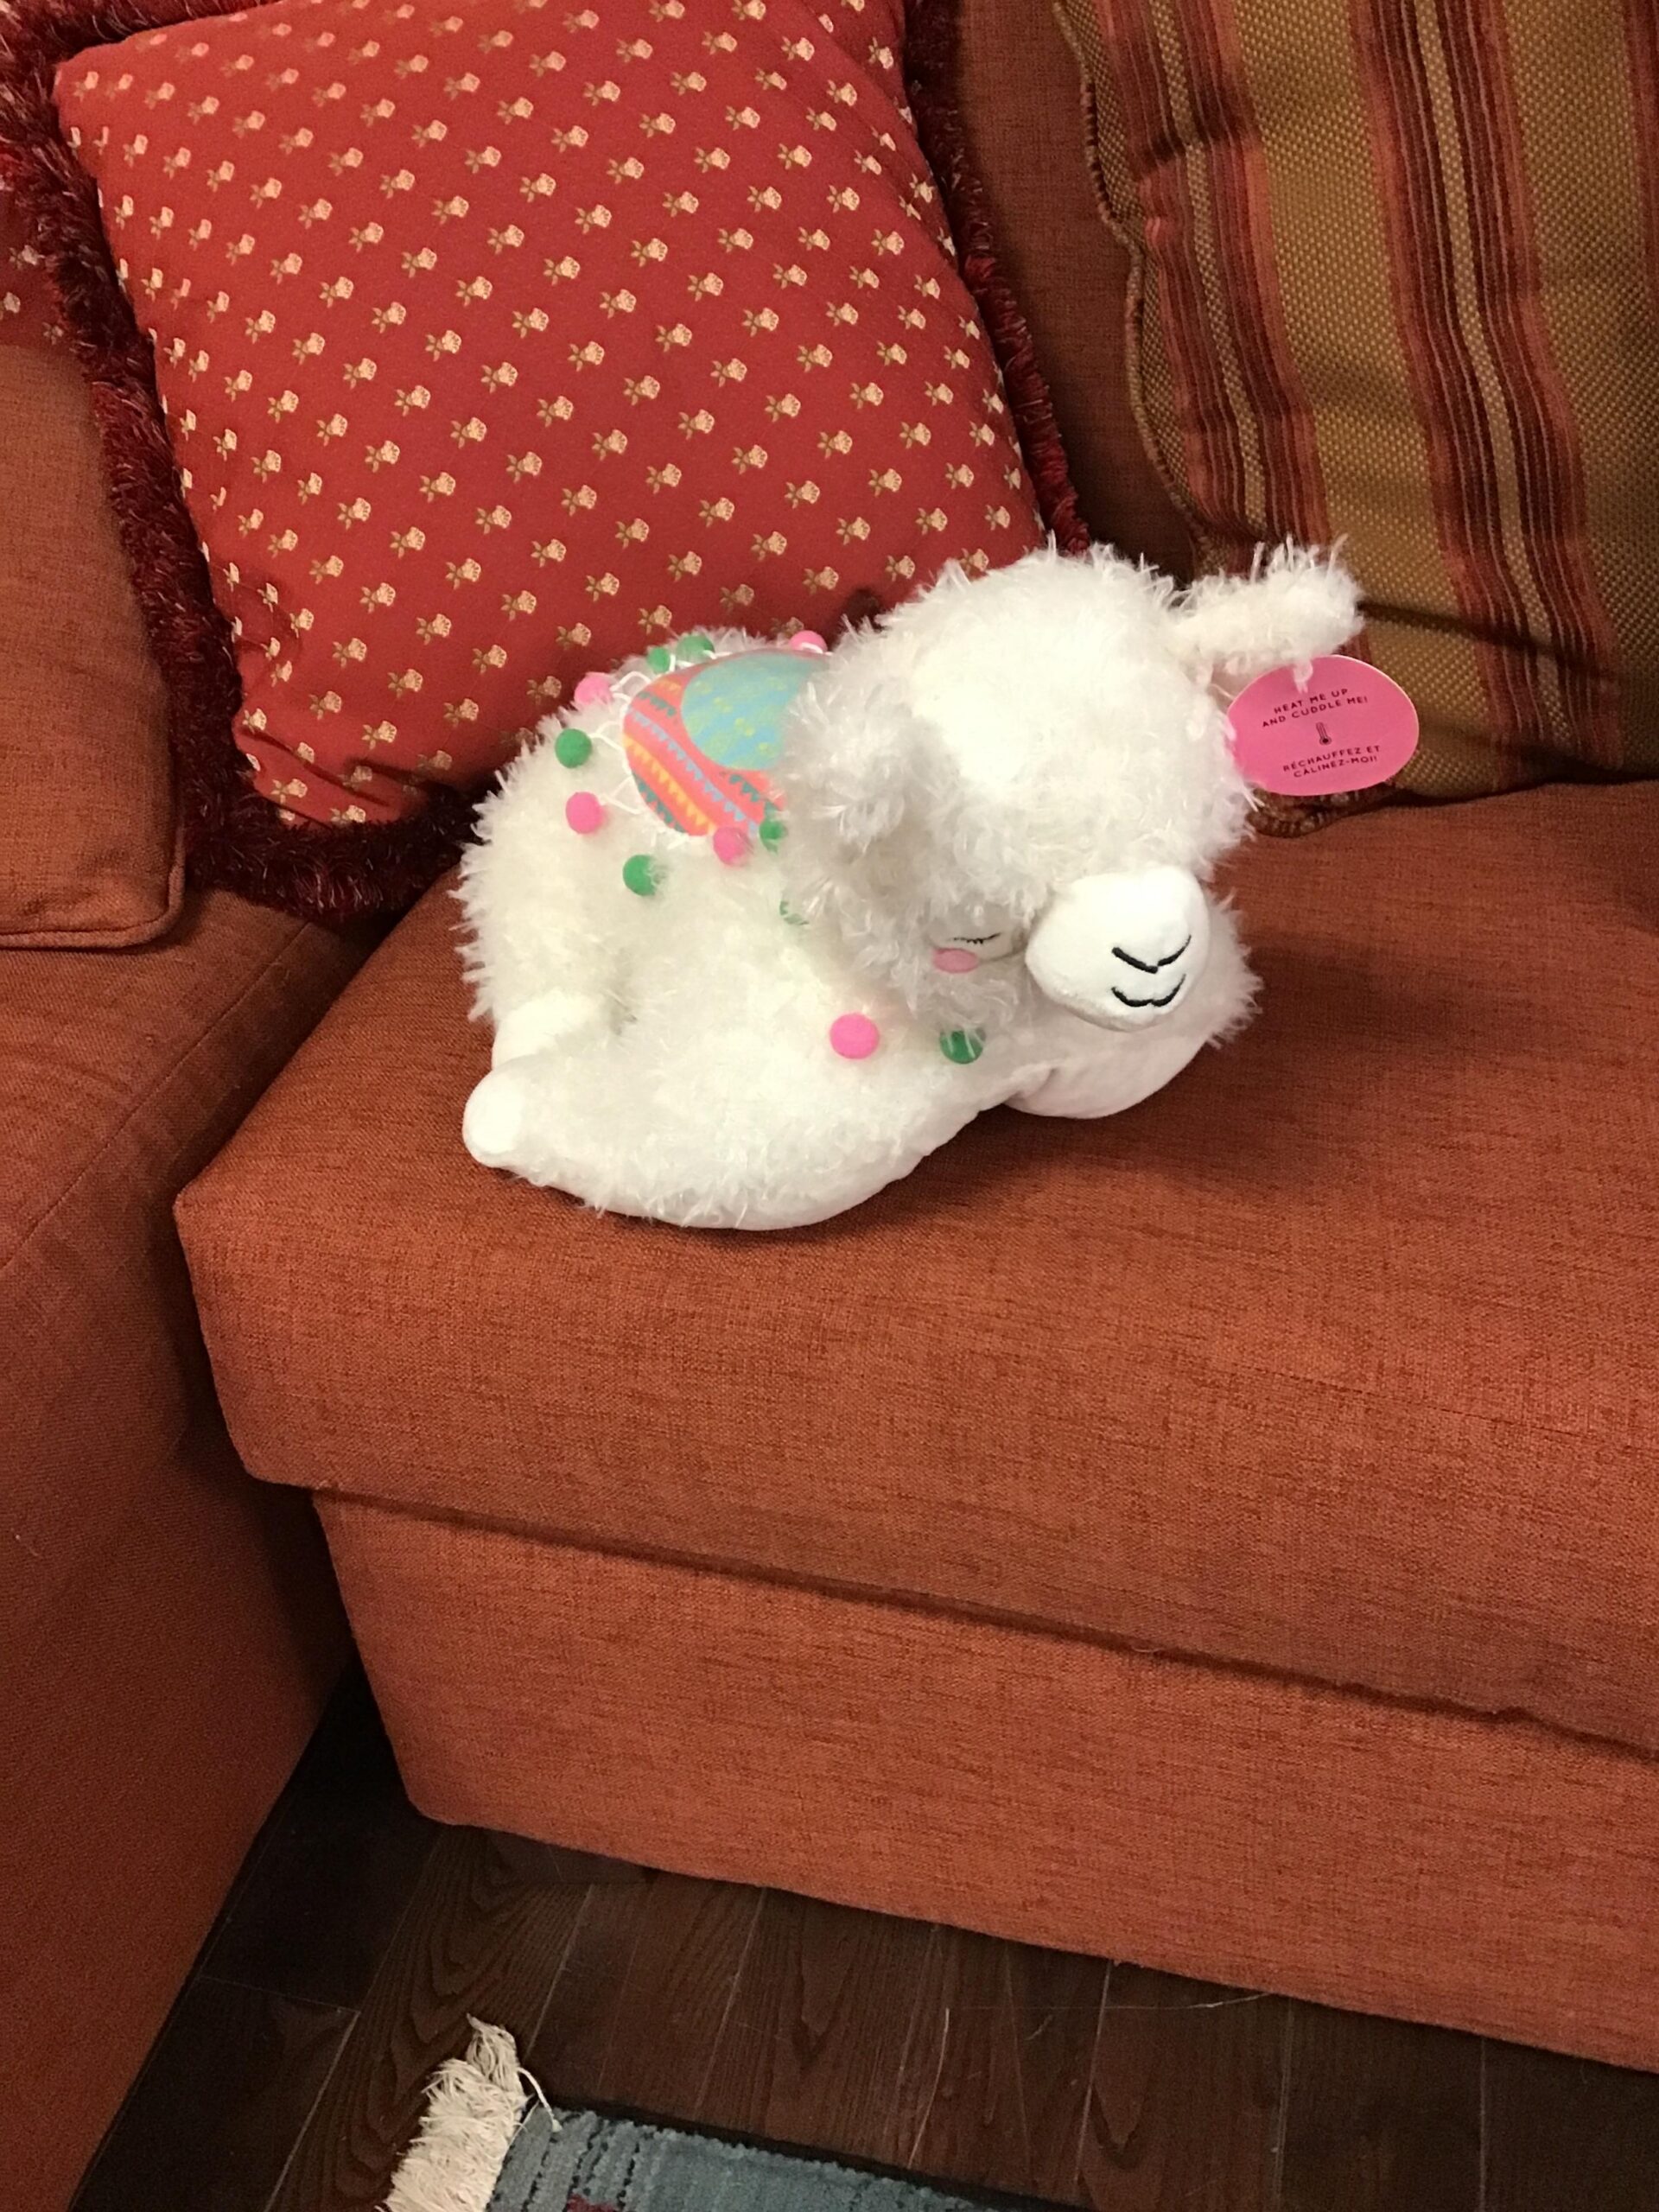 Little Lamb Heating Pad ‘Pillow Pet’